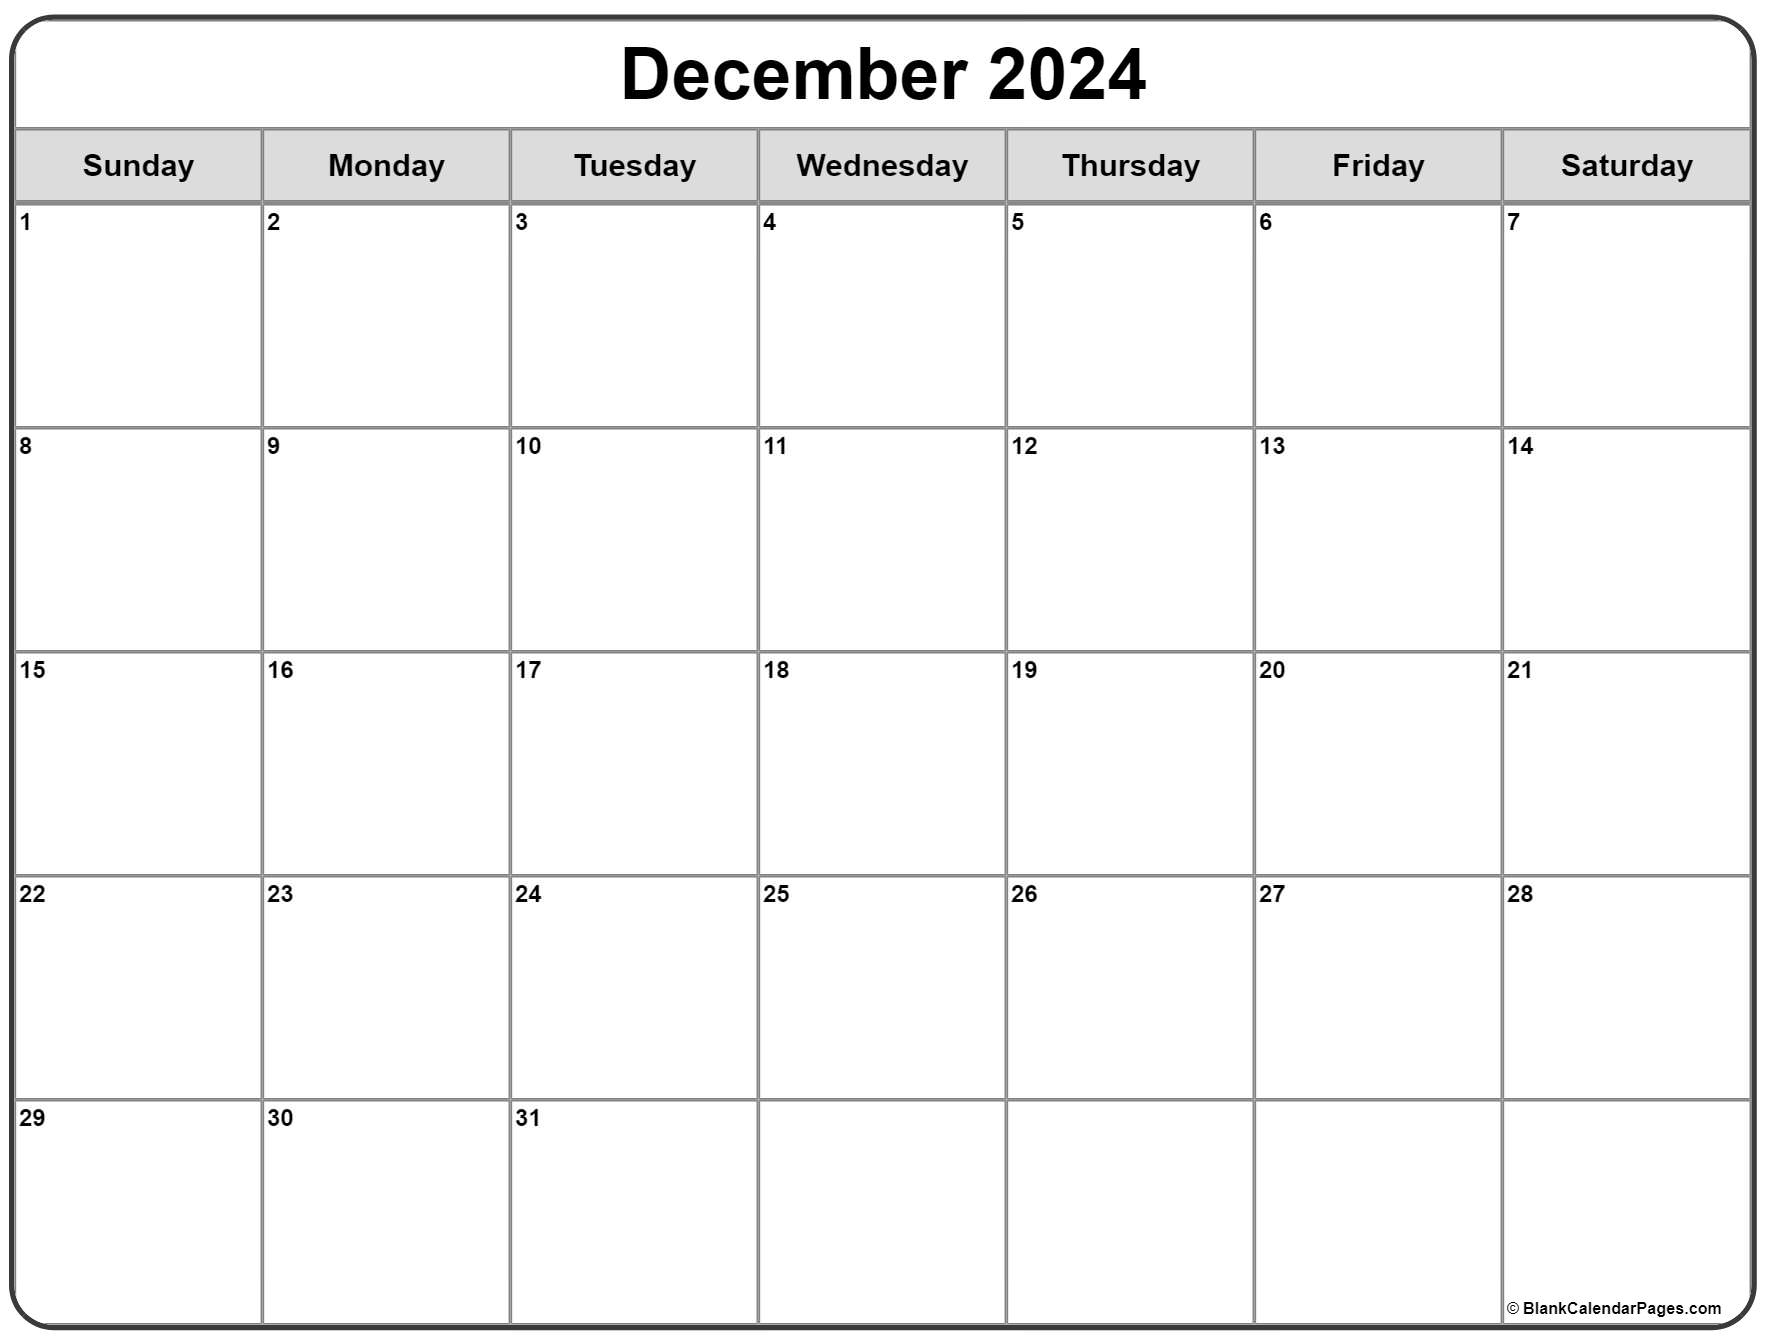 December 2024 Calendar | Free Printable Calendar with Free Printable Blank December 2024 Calendar